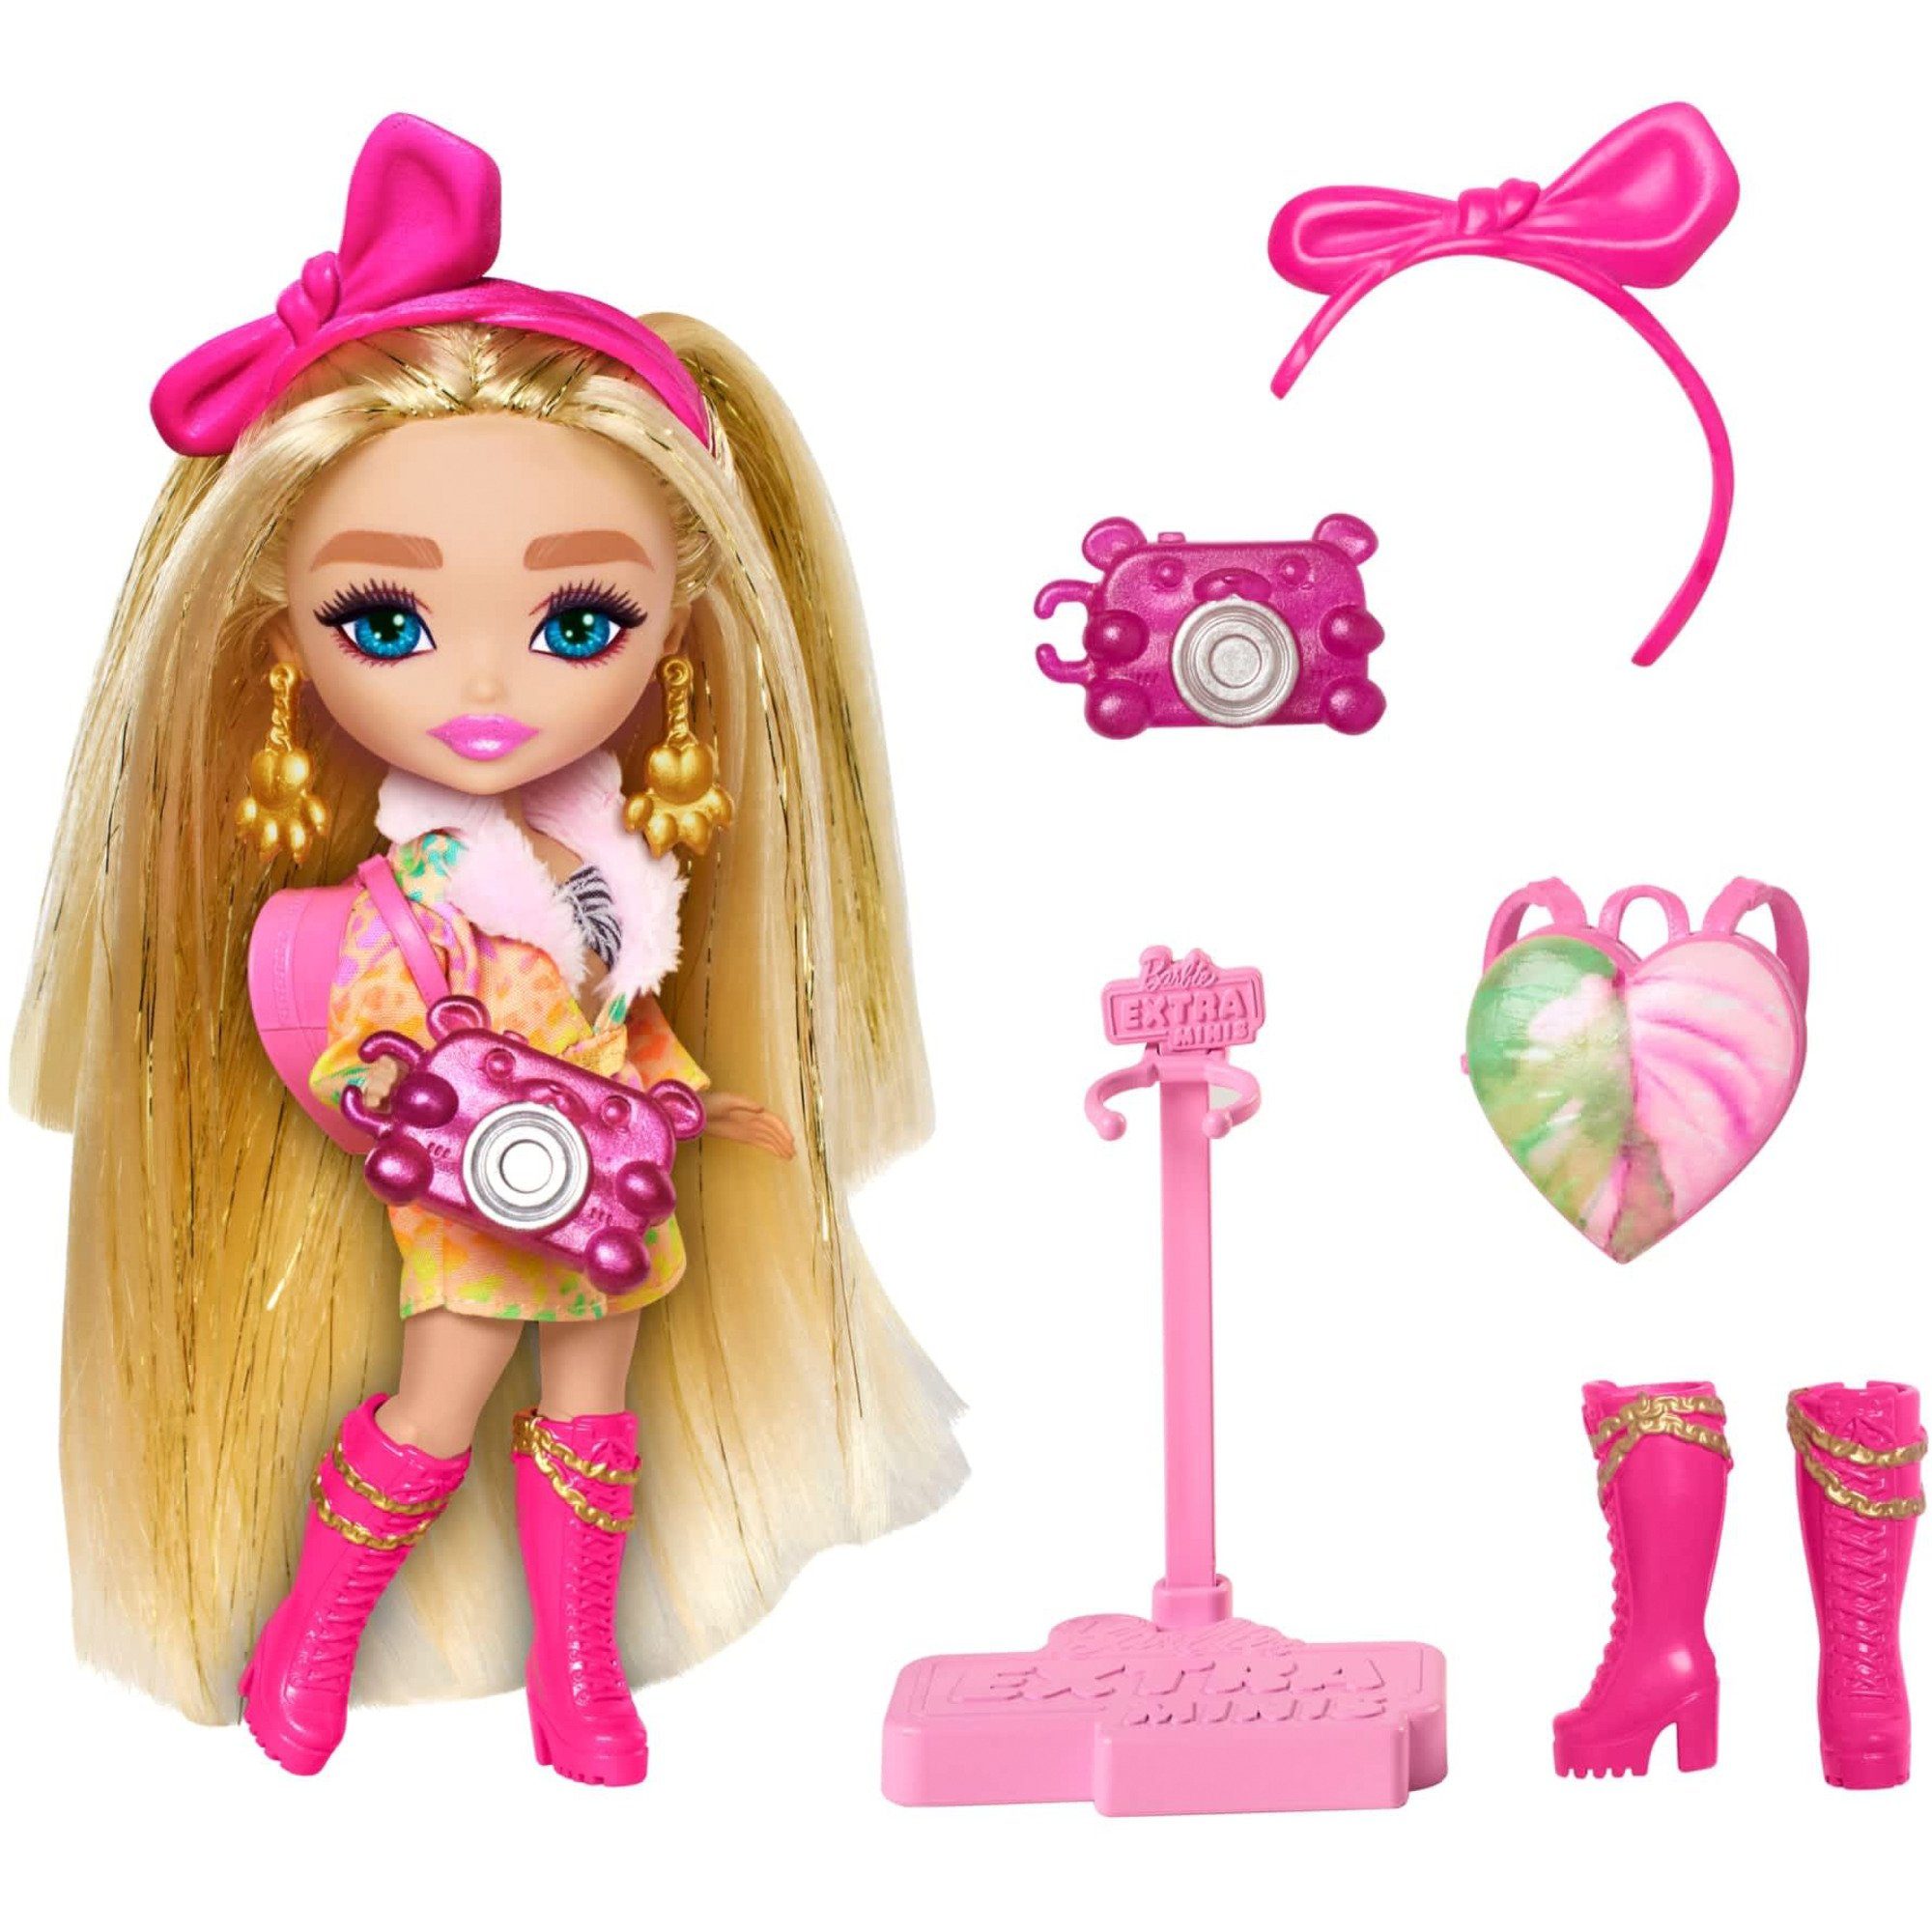 Safari-Mode Babypuppe - Fly Barbie Mattel® Mini-Puppe Barbie Extra